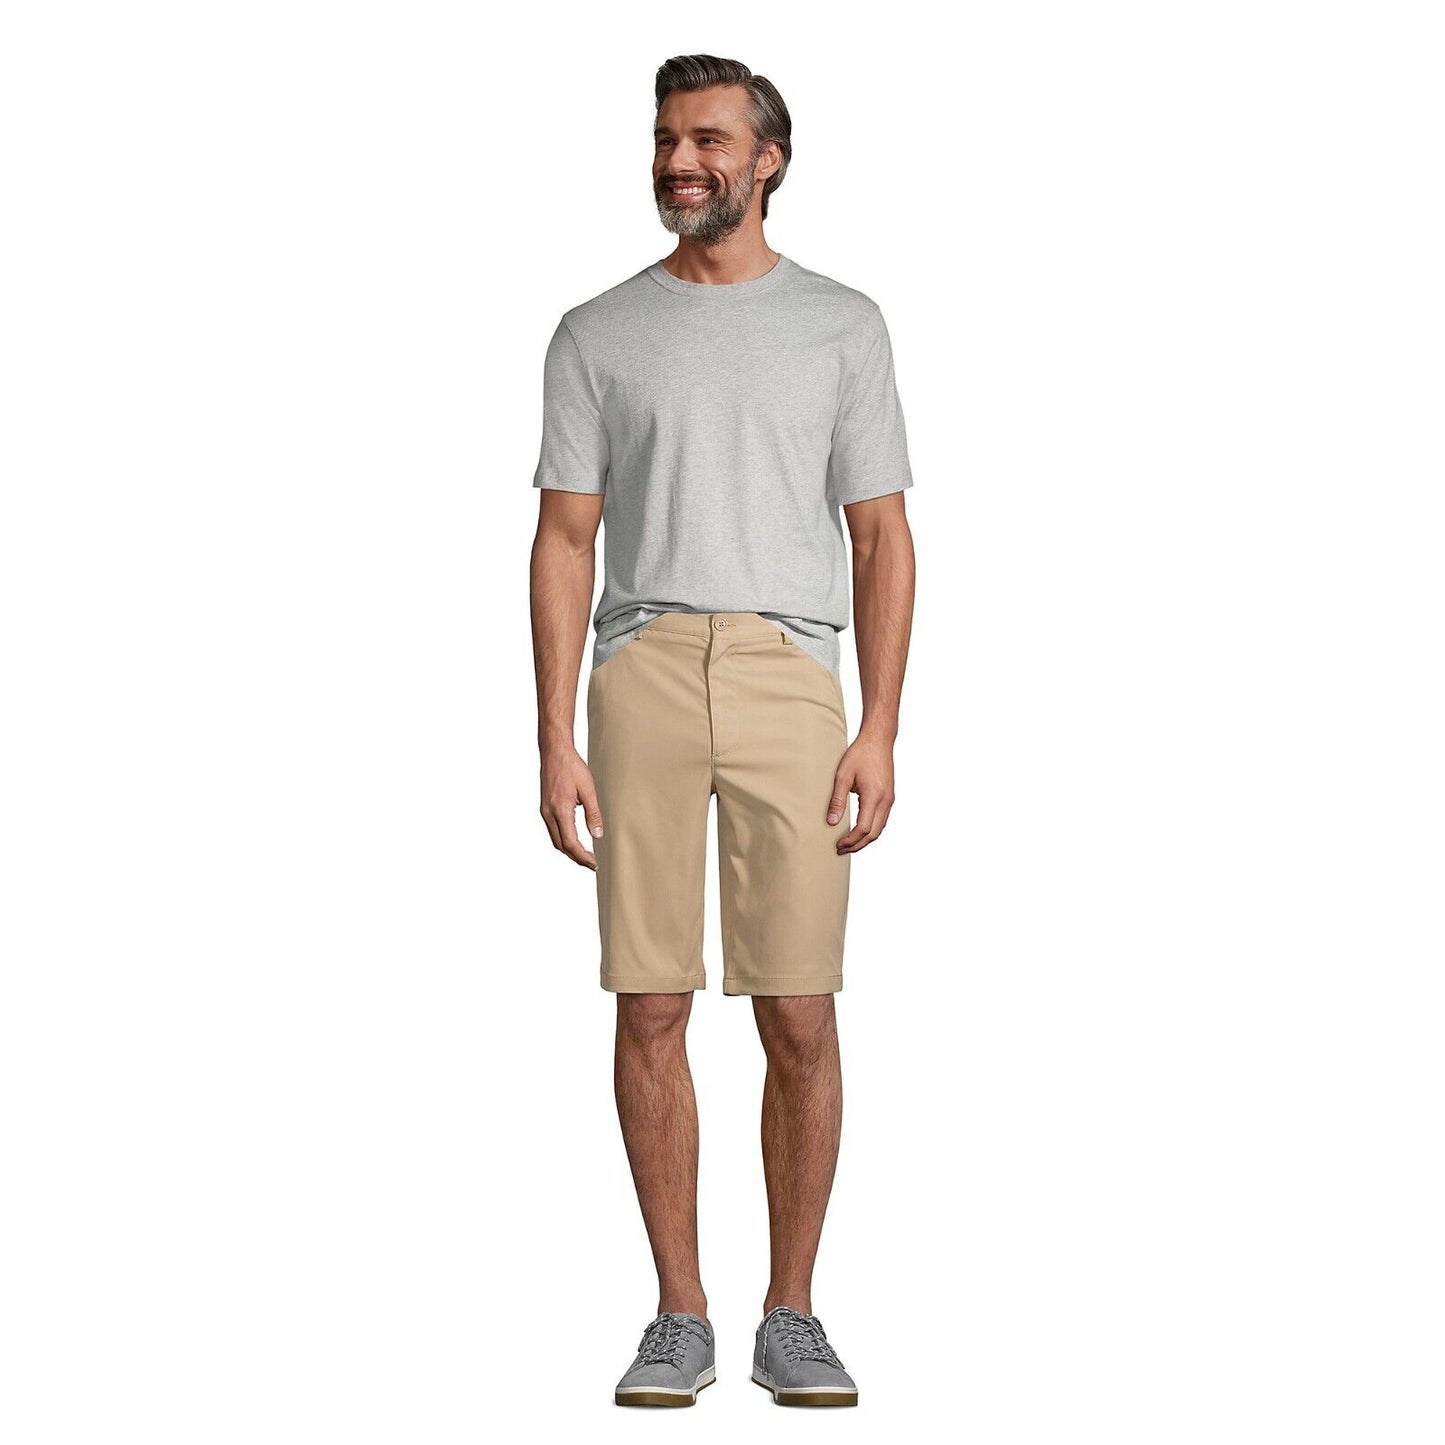 Men's Tall Short Sleeve Essential T-shirt Size L